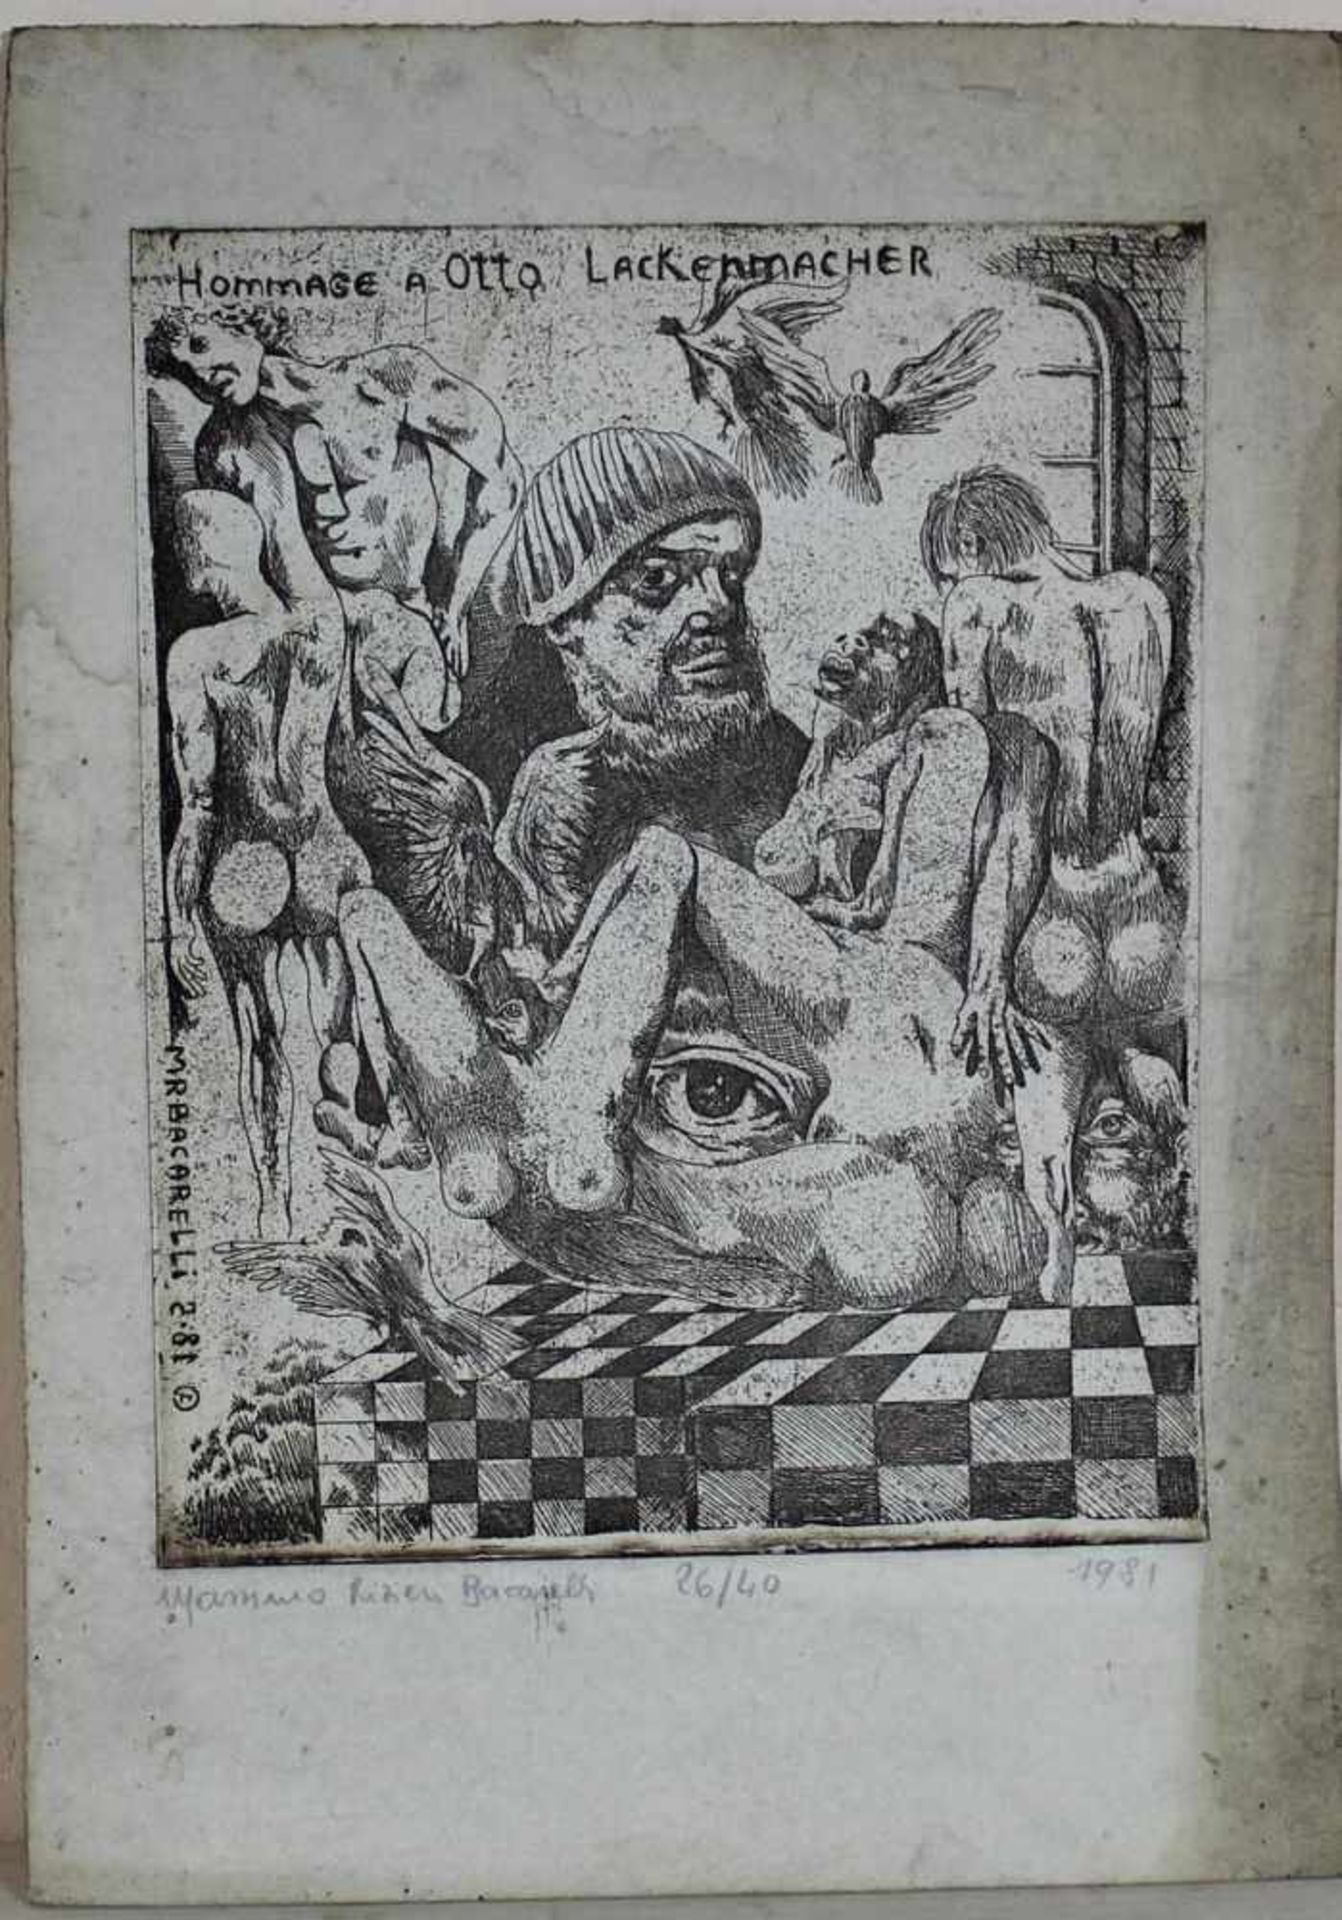 Massimo R Bacarelli: Radierung Hommage a Otto Lackenmacher, Blattgrösse ca. 35 x 25 cm, Druck ca. 25